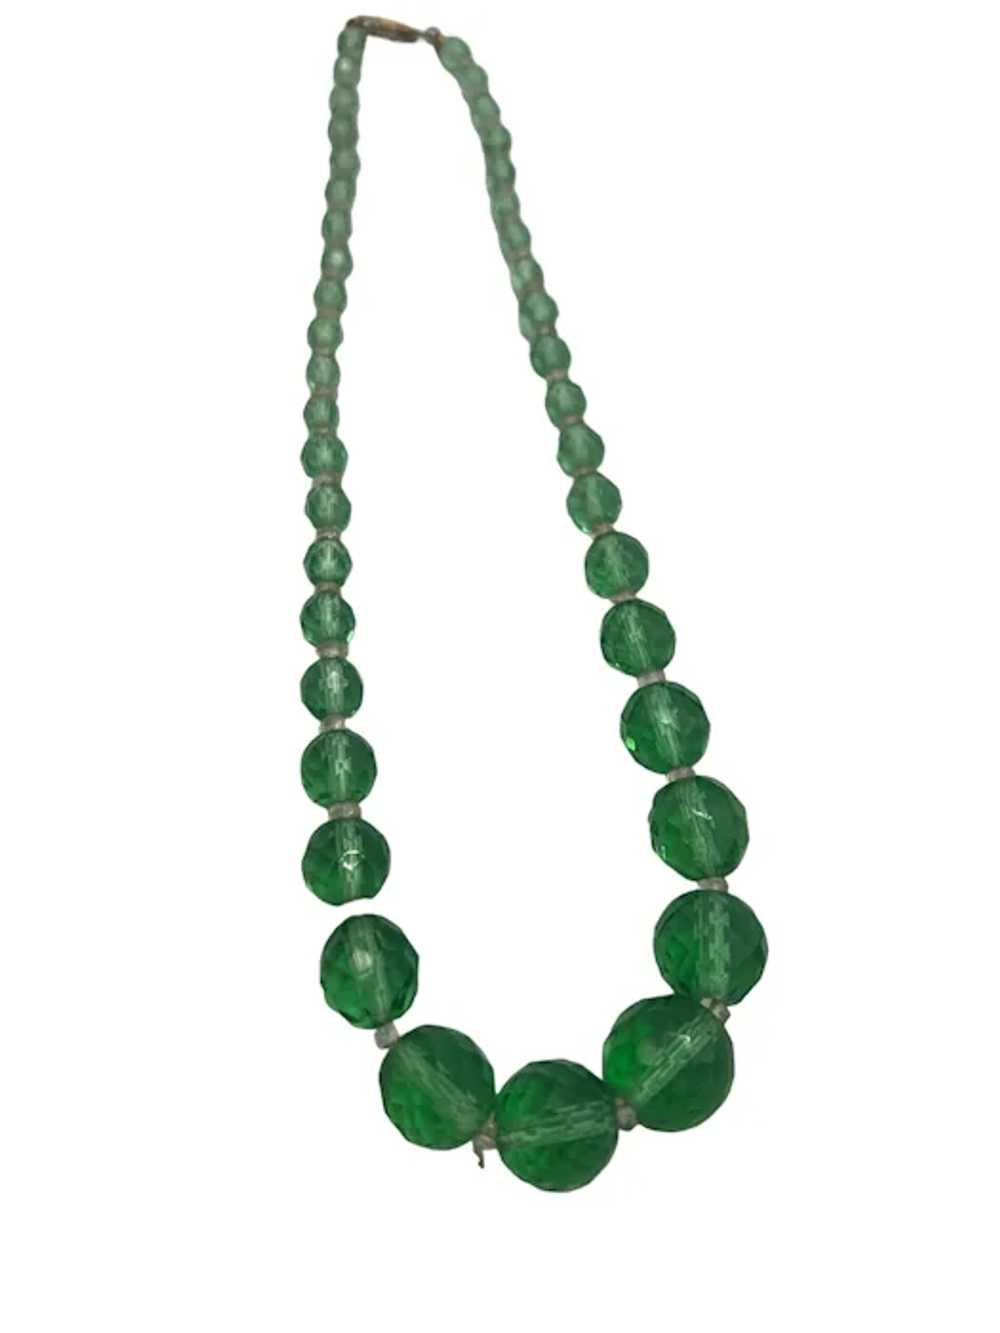 Vintage Green Cut Crystal Necklace - image 3